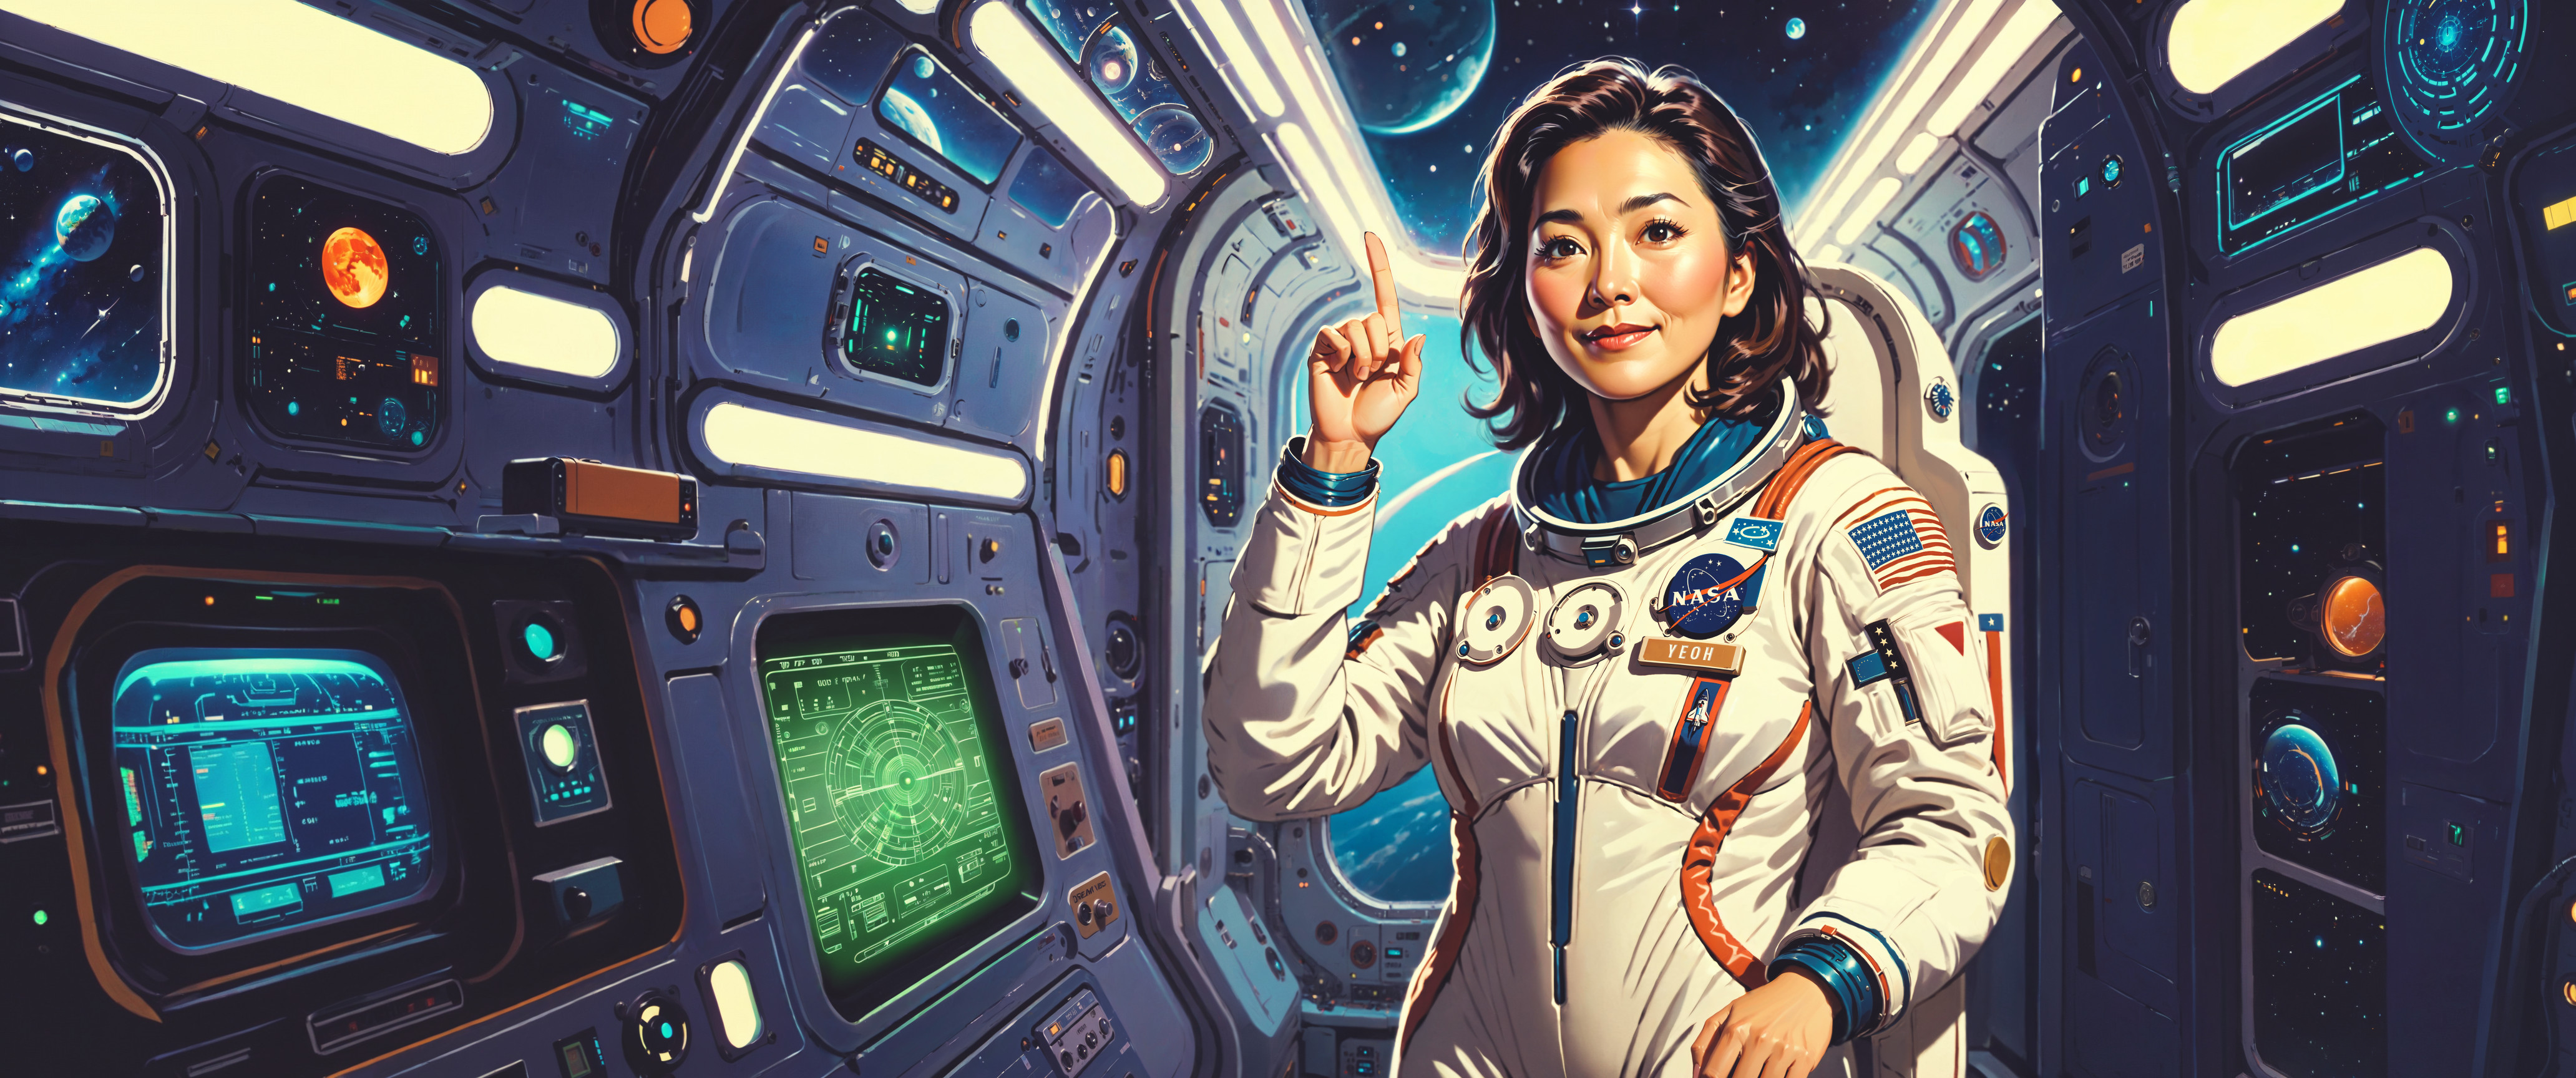 General 4128x1728 AI art ultrawide astronaut spaceship science fiction science fiction women